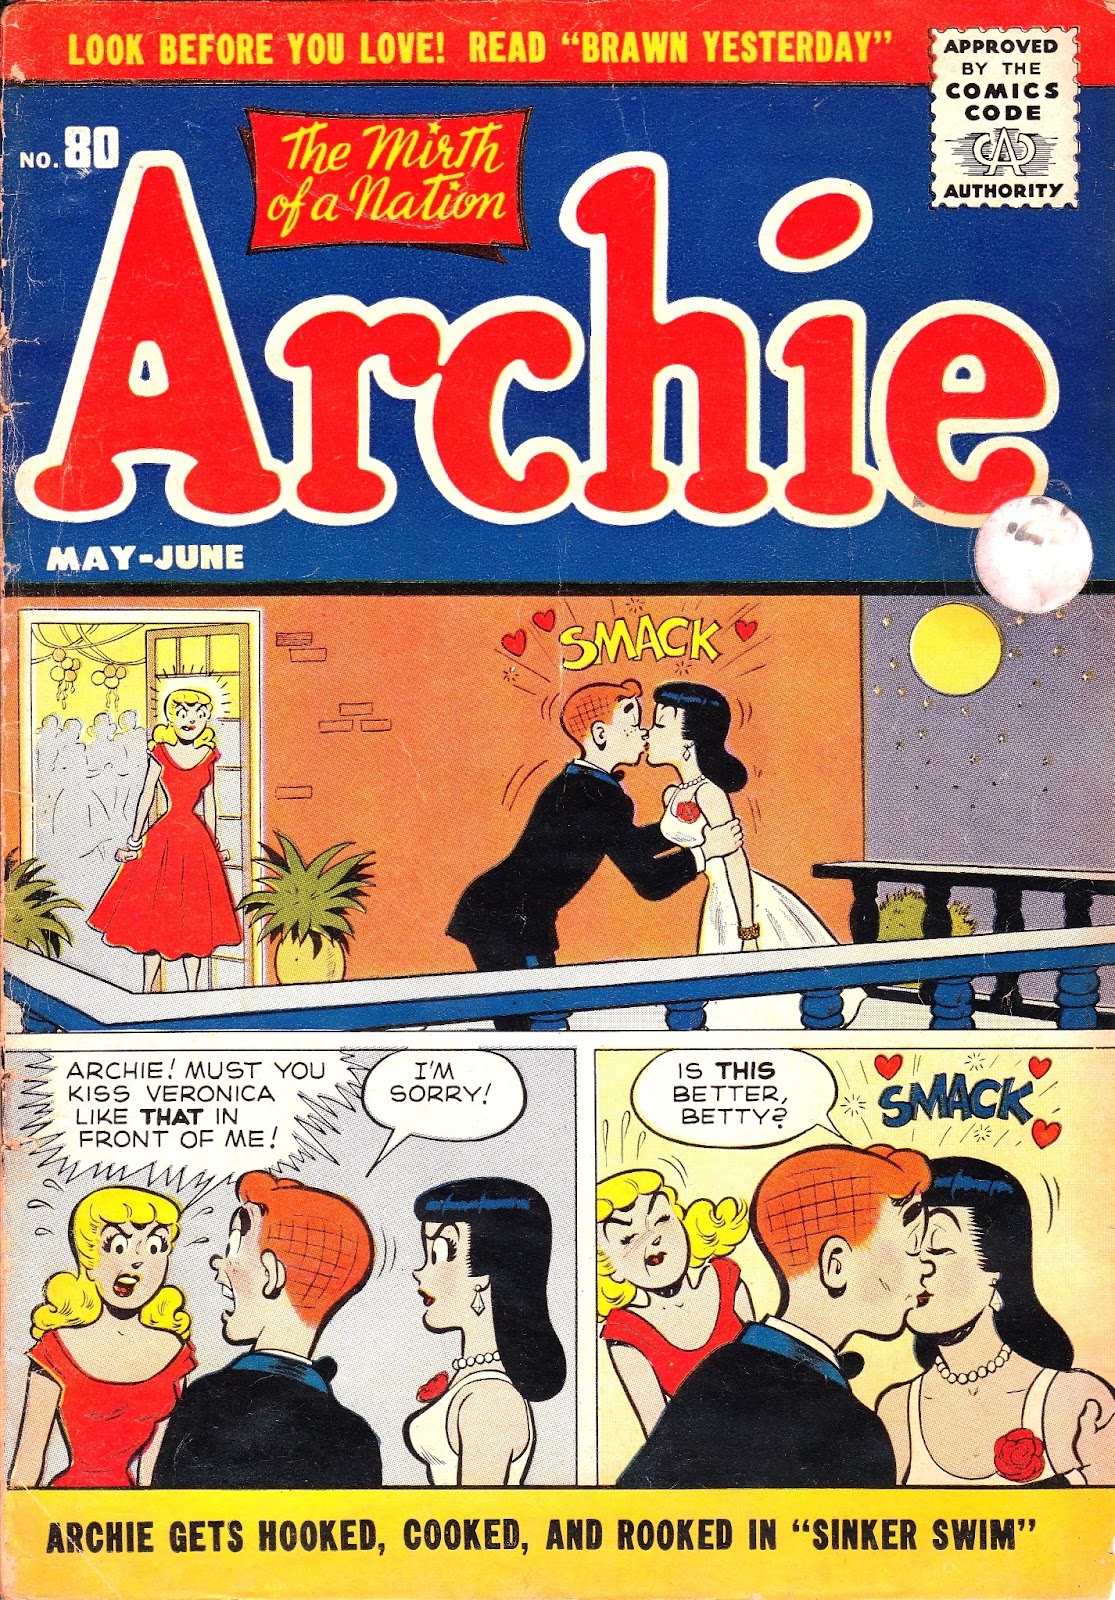 Read archie comics online free